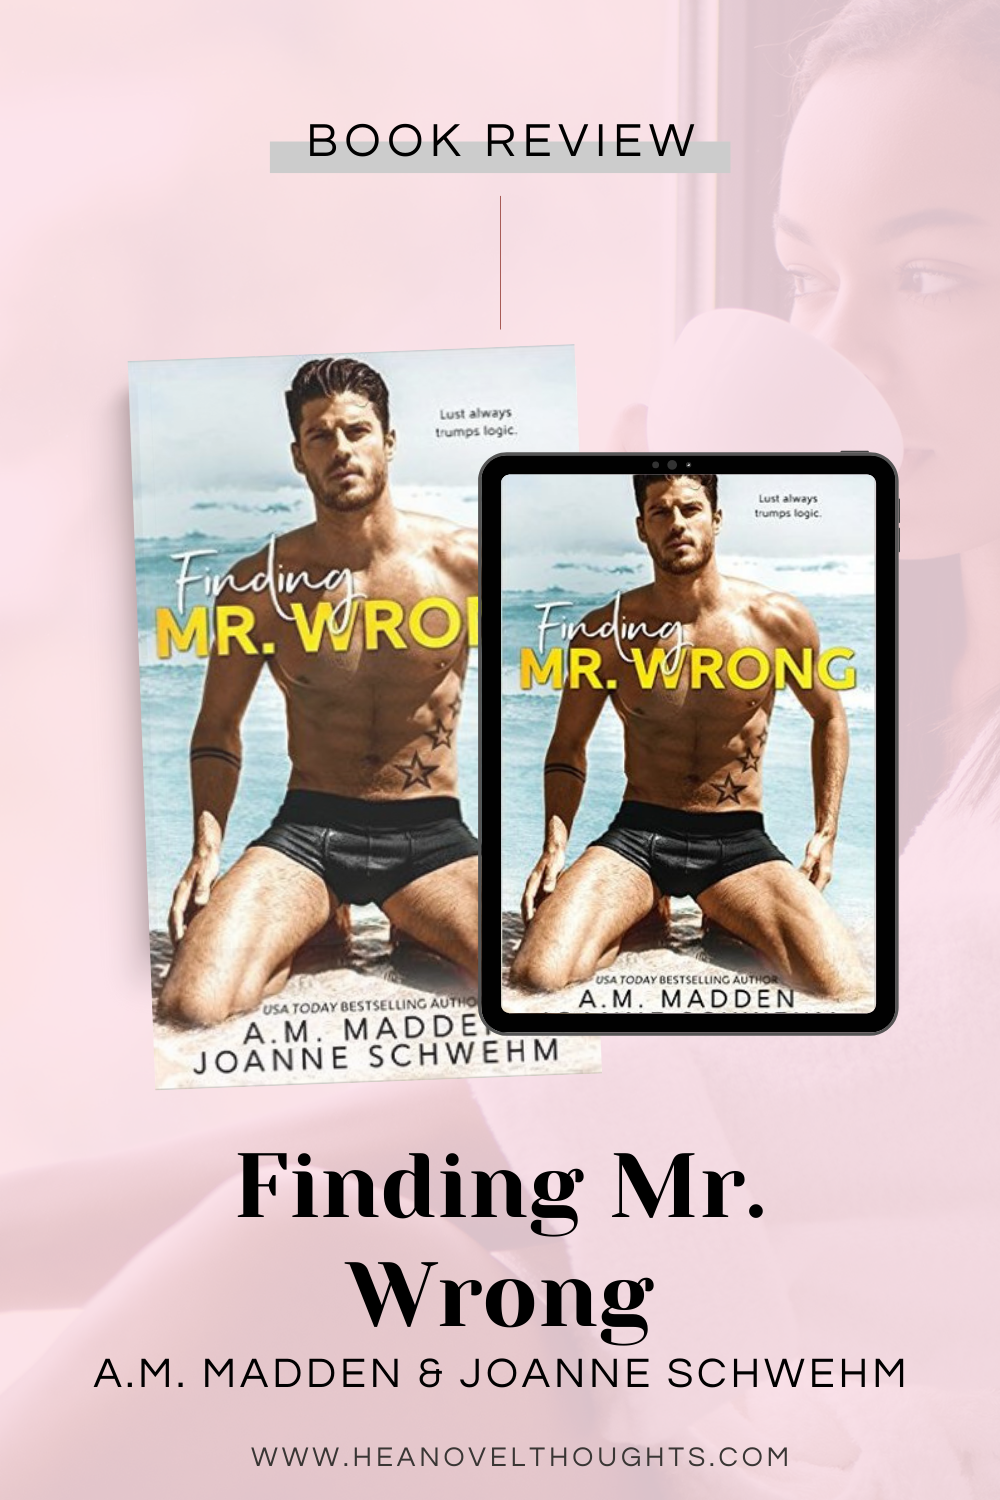 Finding Mr. Wrong by A.M. Madden & Joanne Schwehm